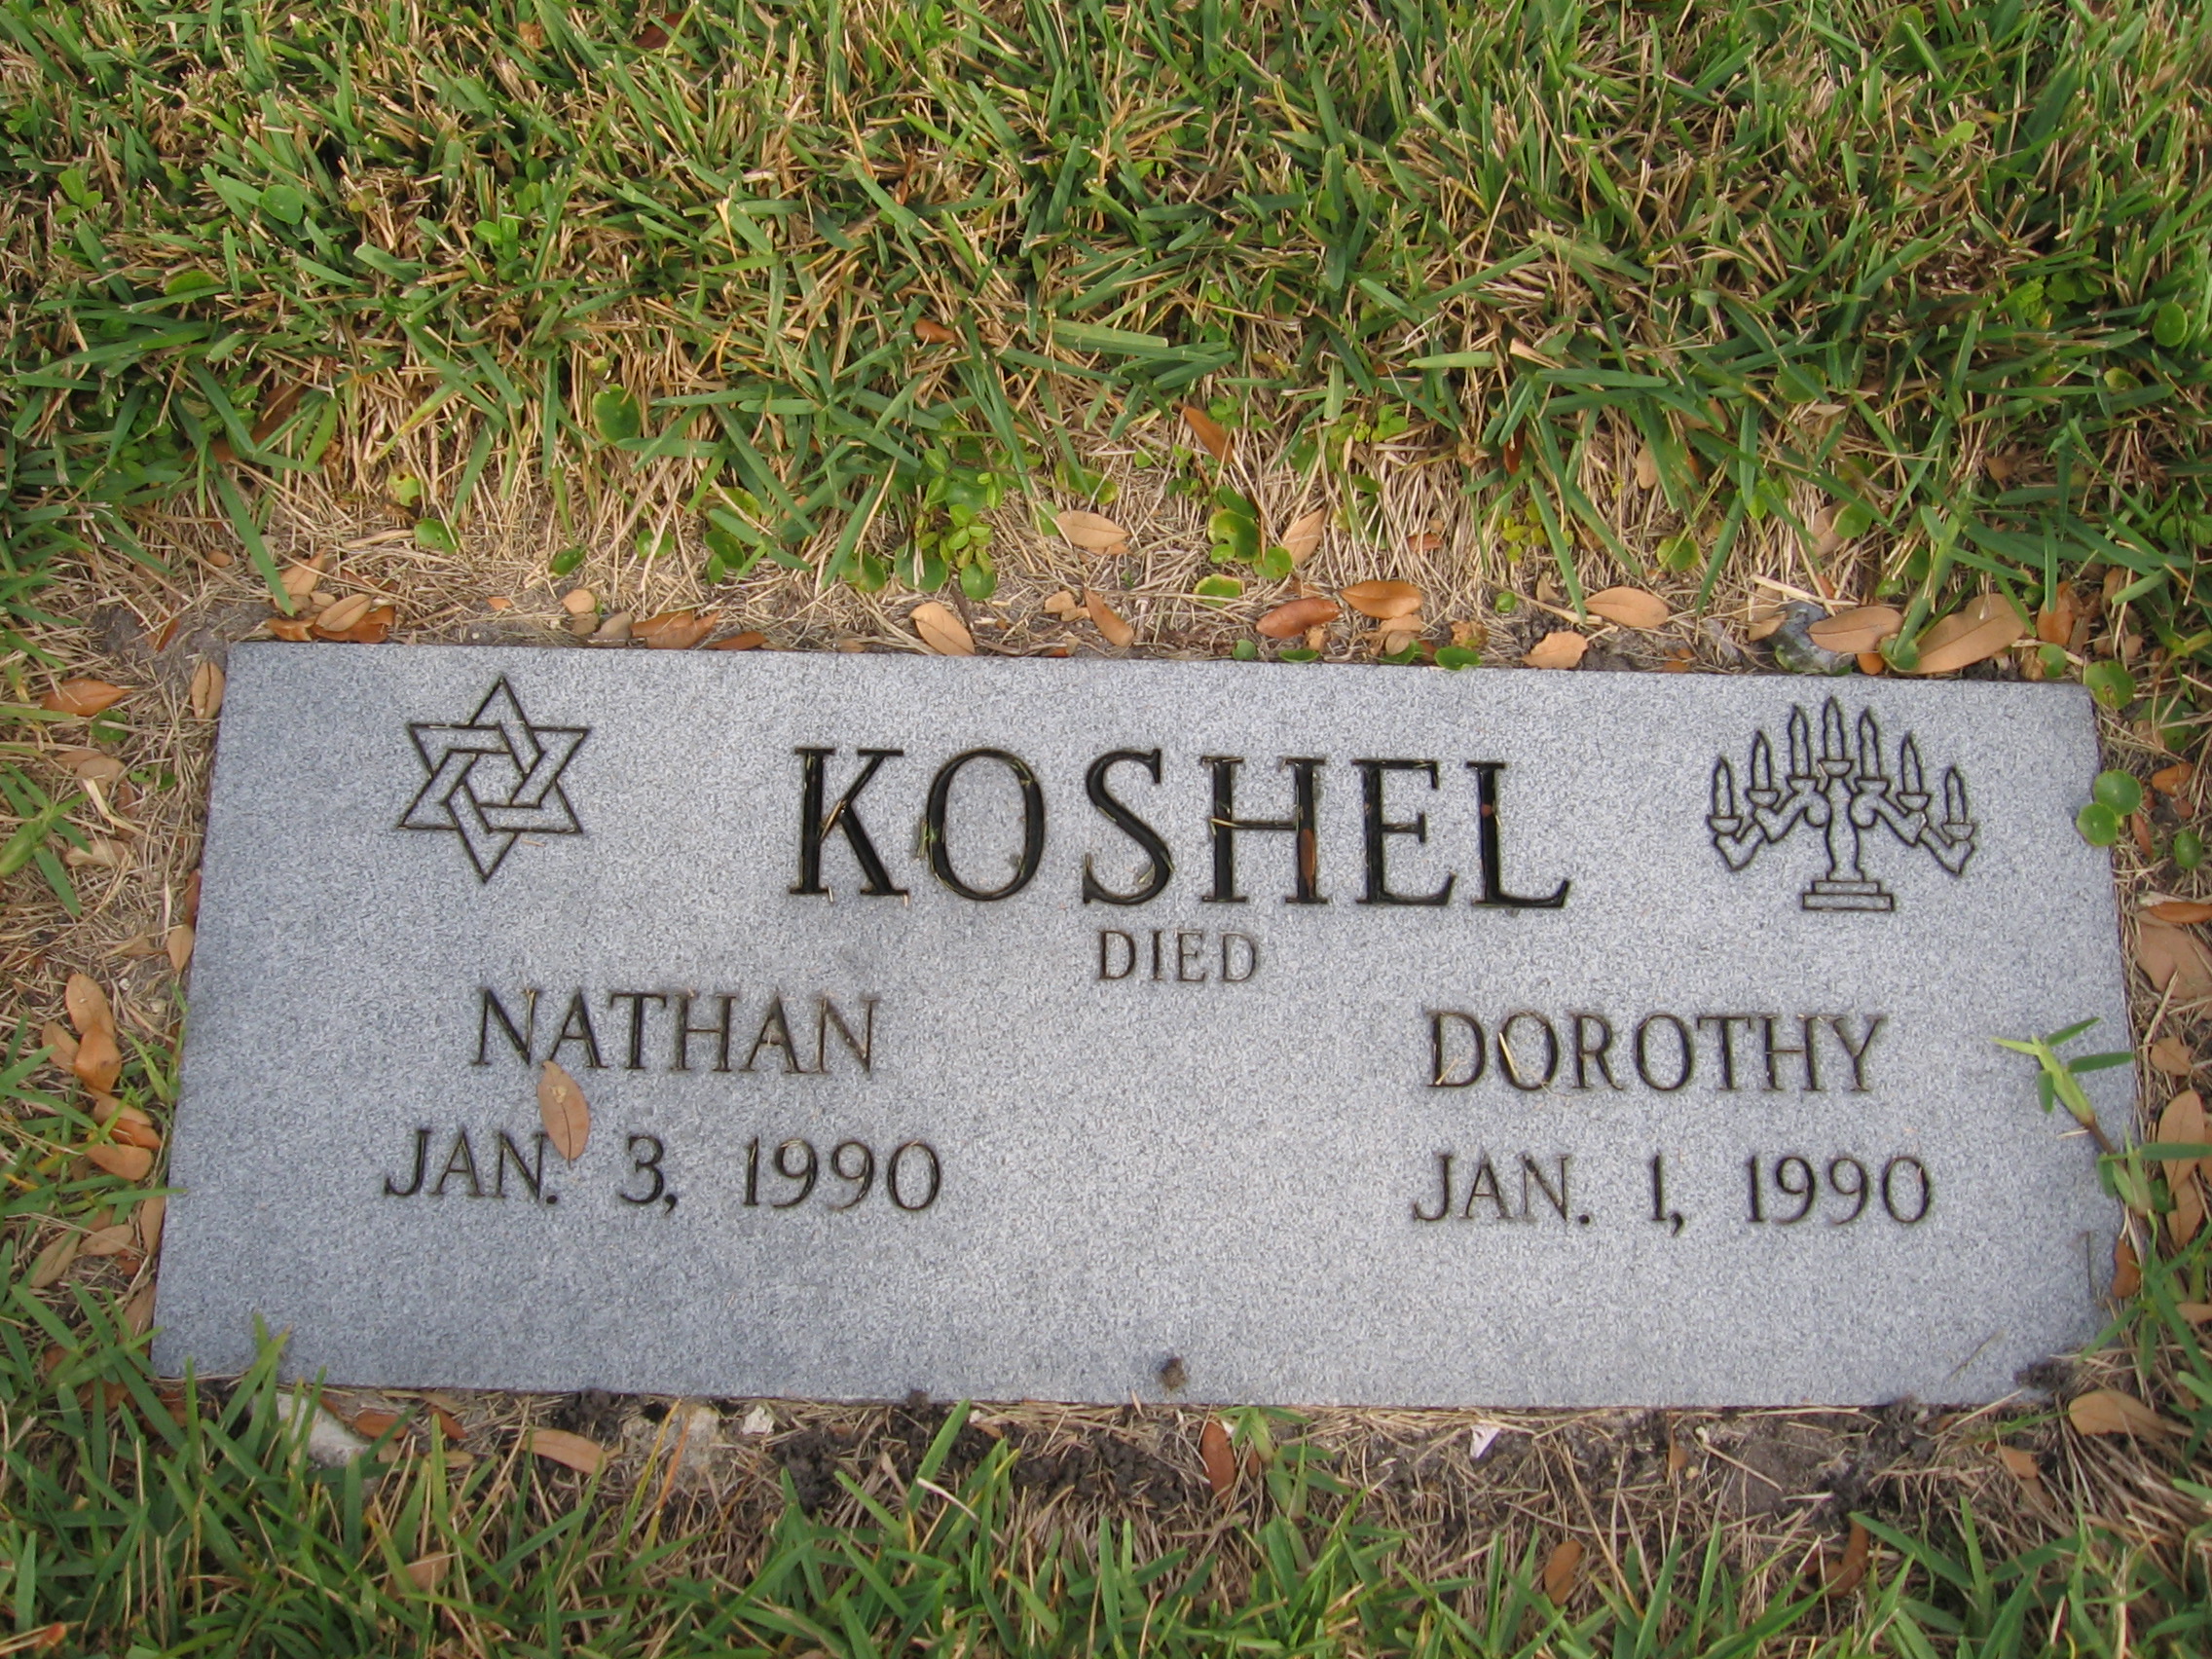 Nathan Koshel